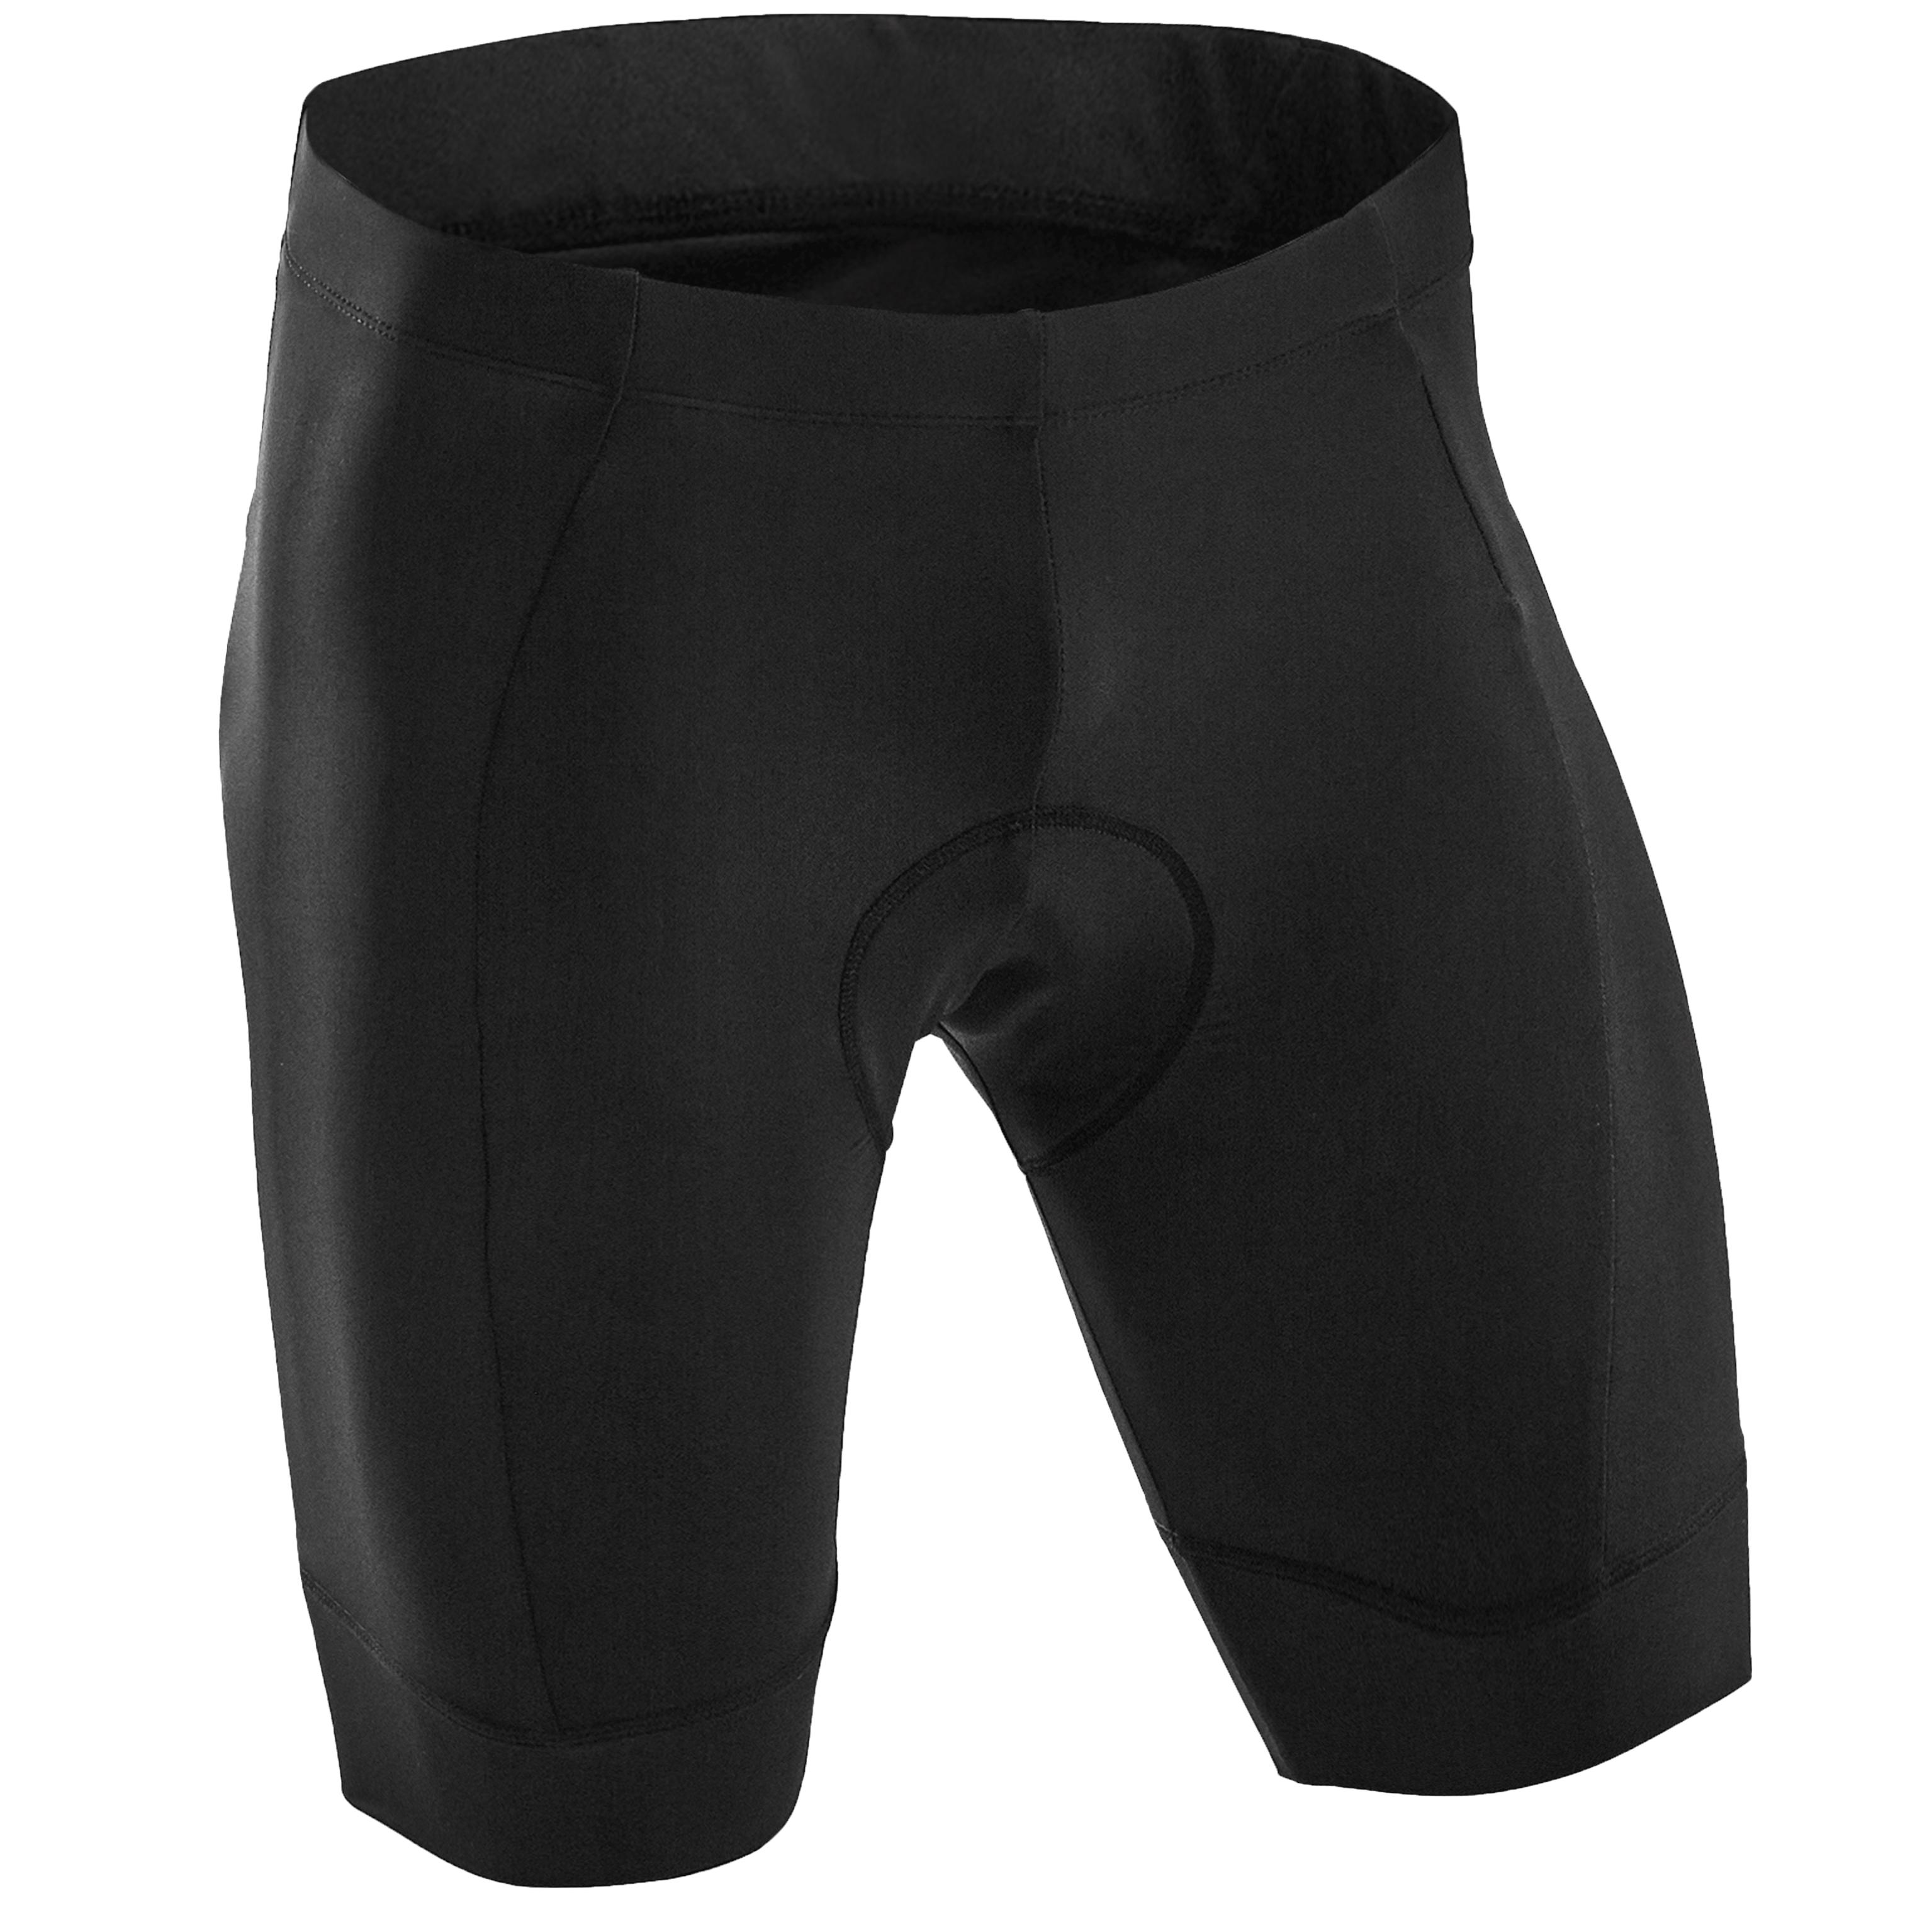 Buy Short 500 cycling shorts online 